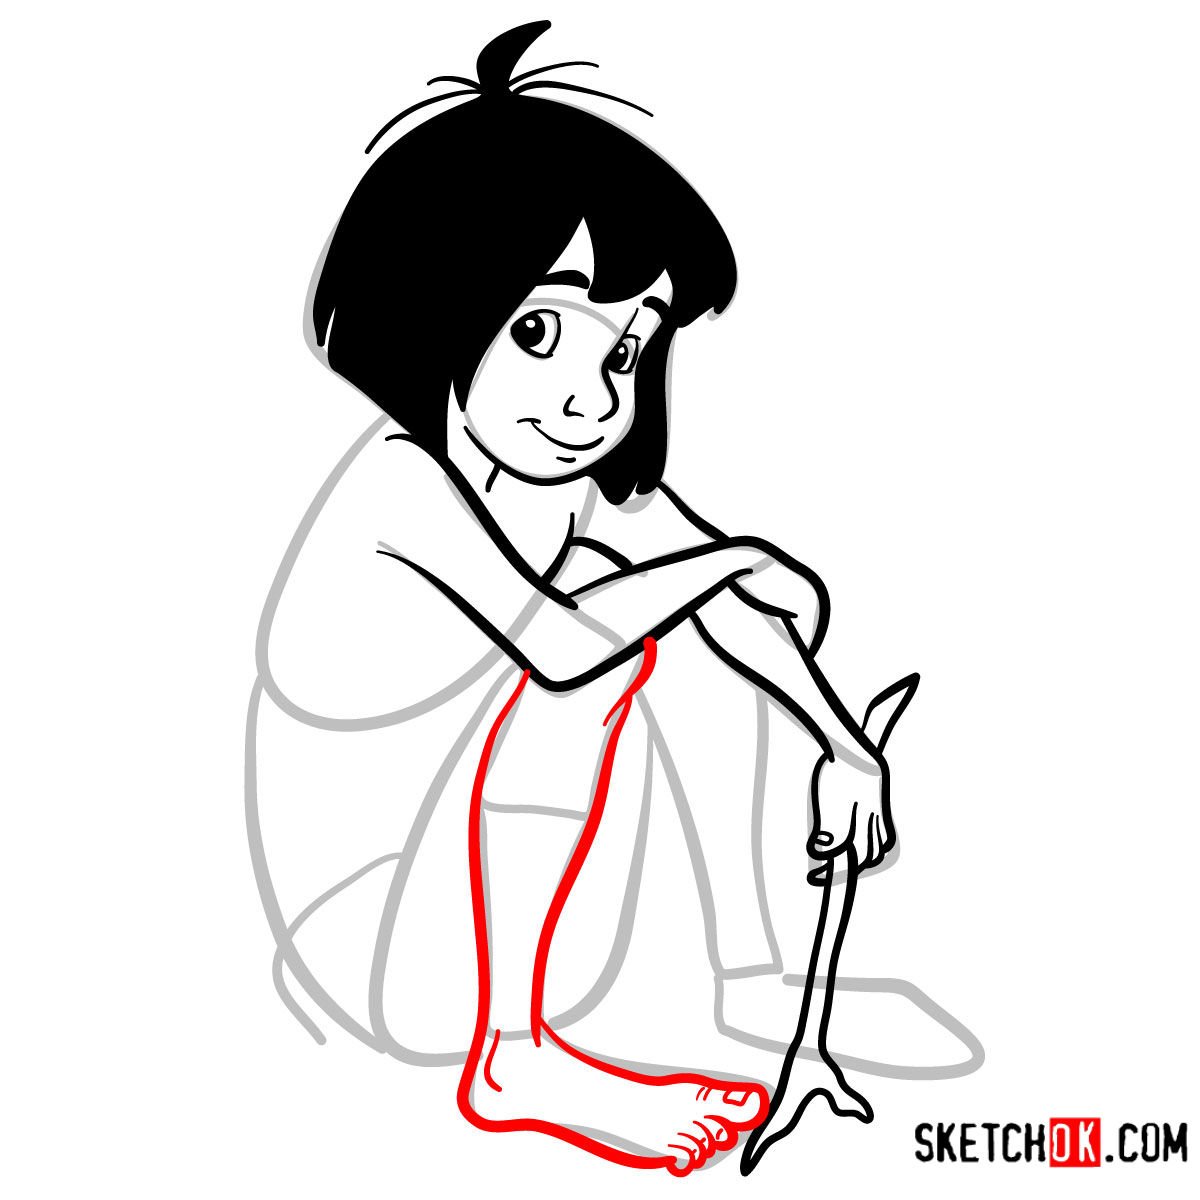 How to draw Mowgli | The Jungle Book - step 09